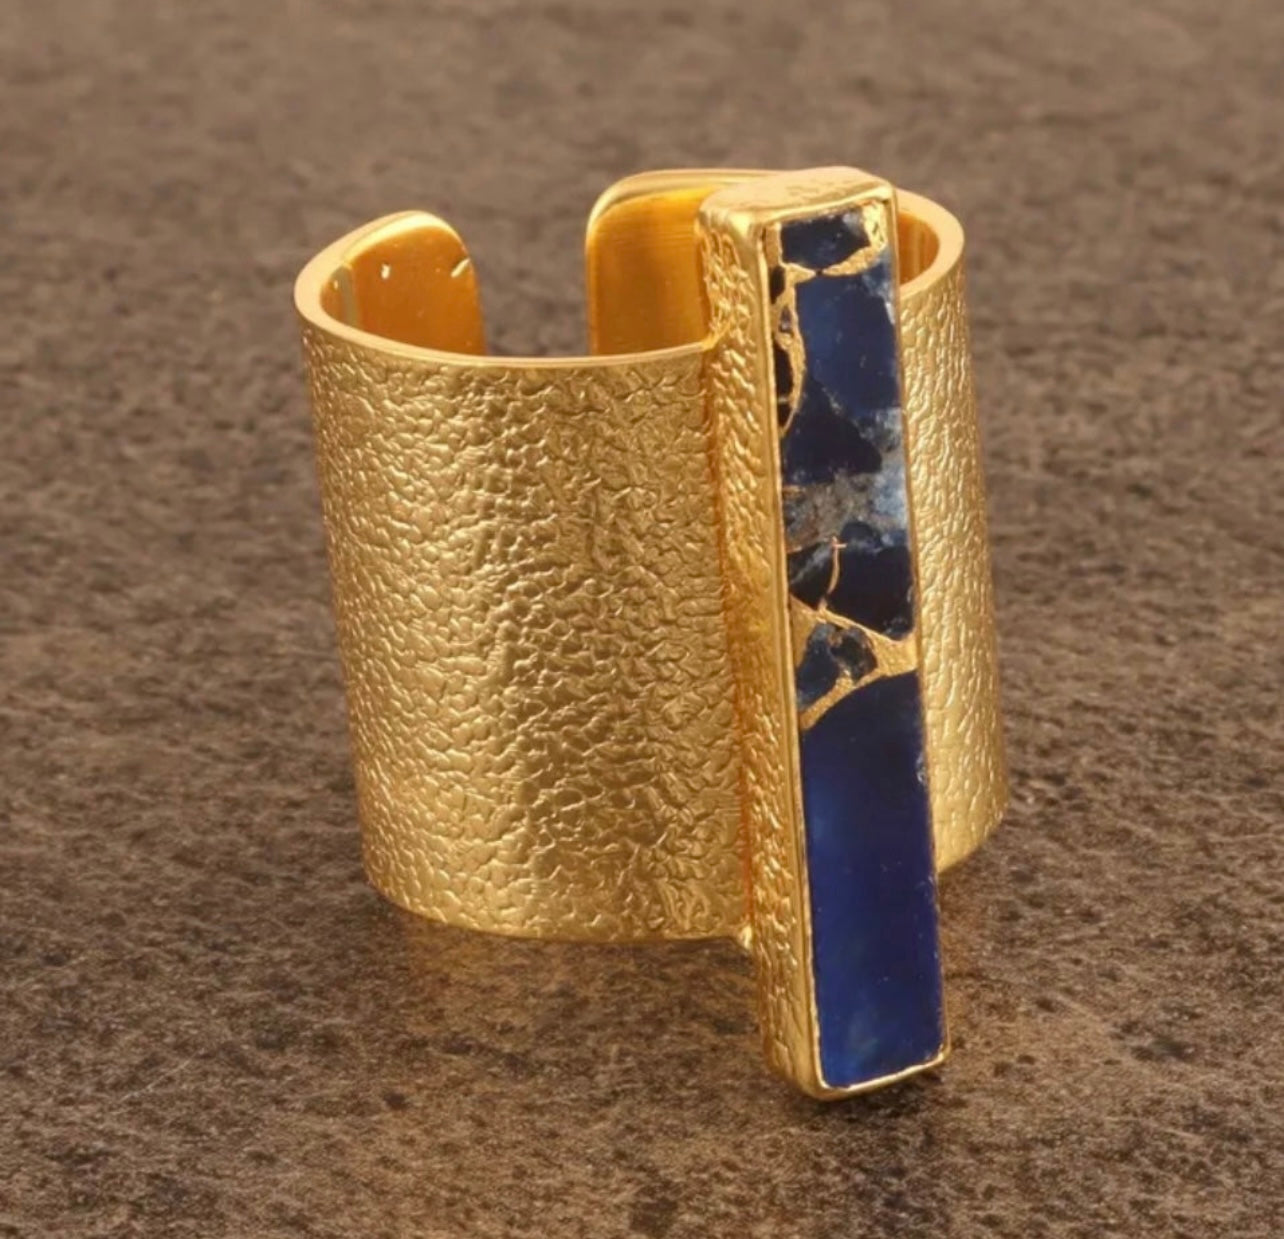 Lapis Lazuli and Blue Jasper Gemstone Statement Necklace and Ring Set